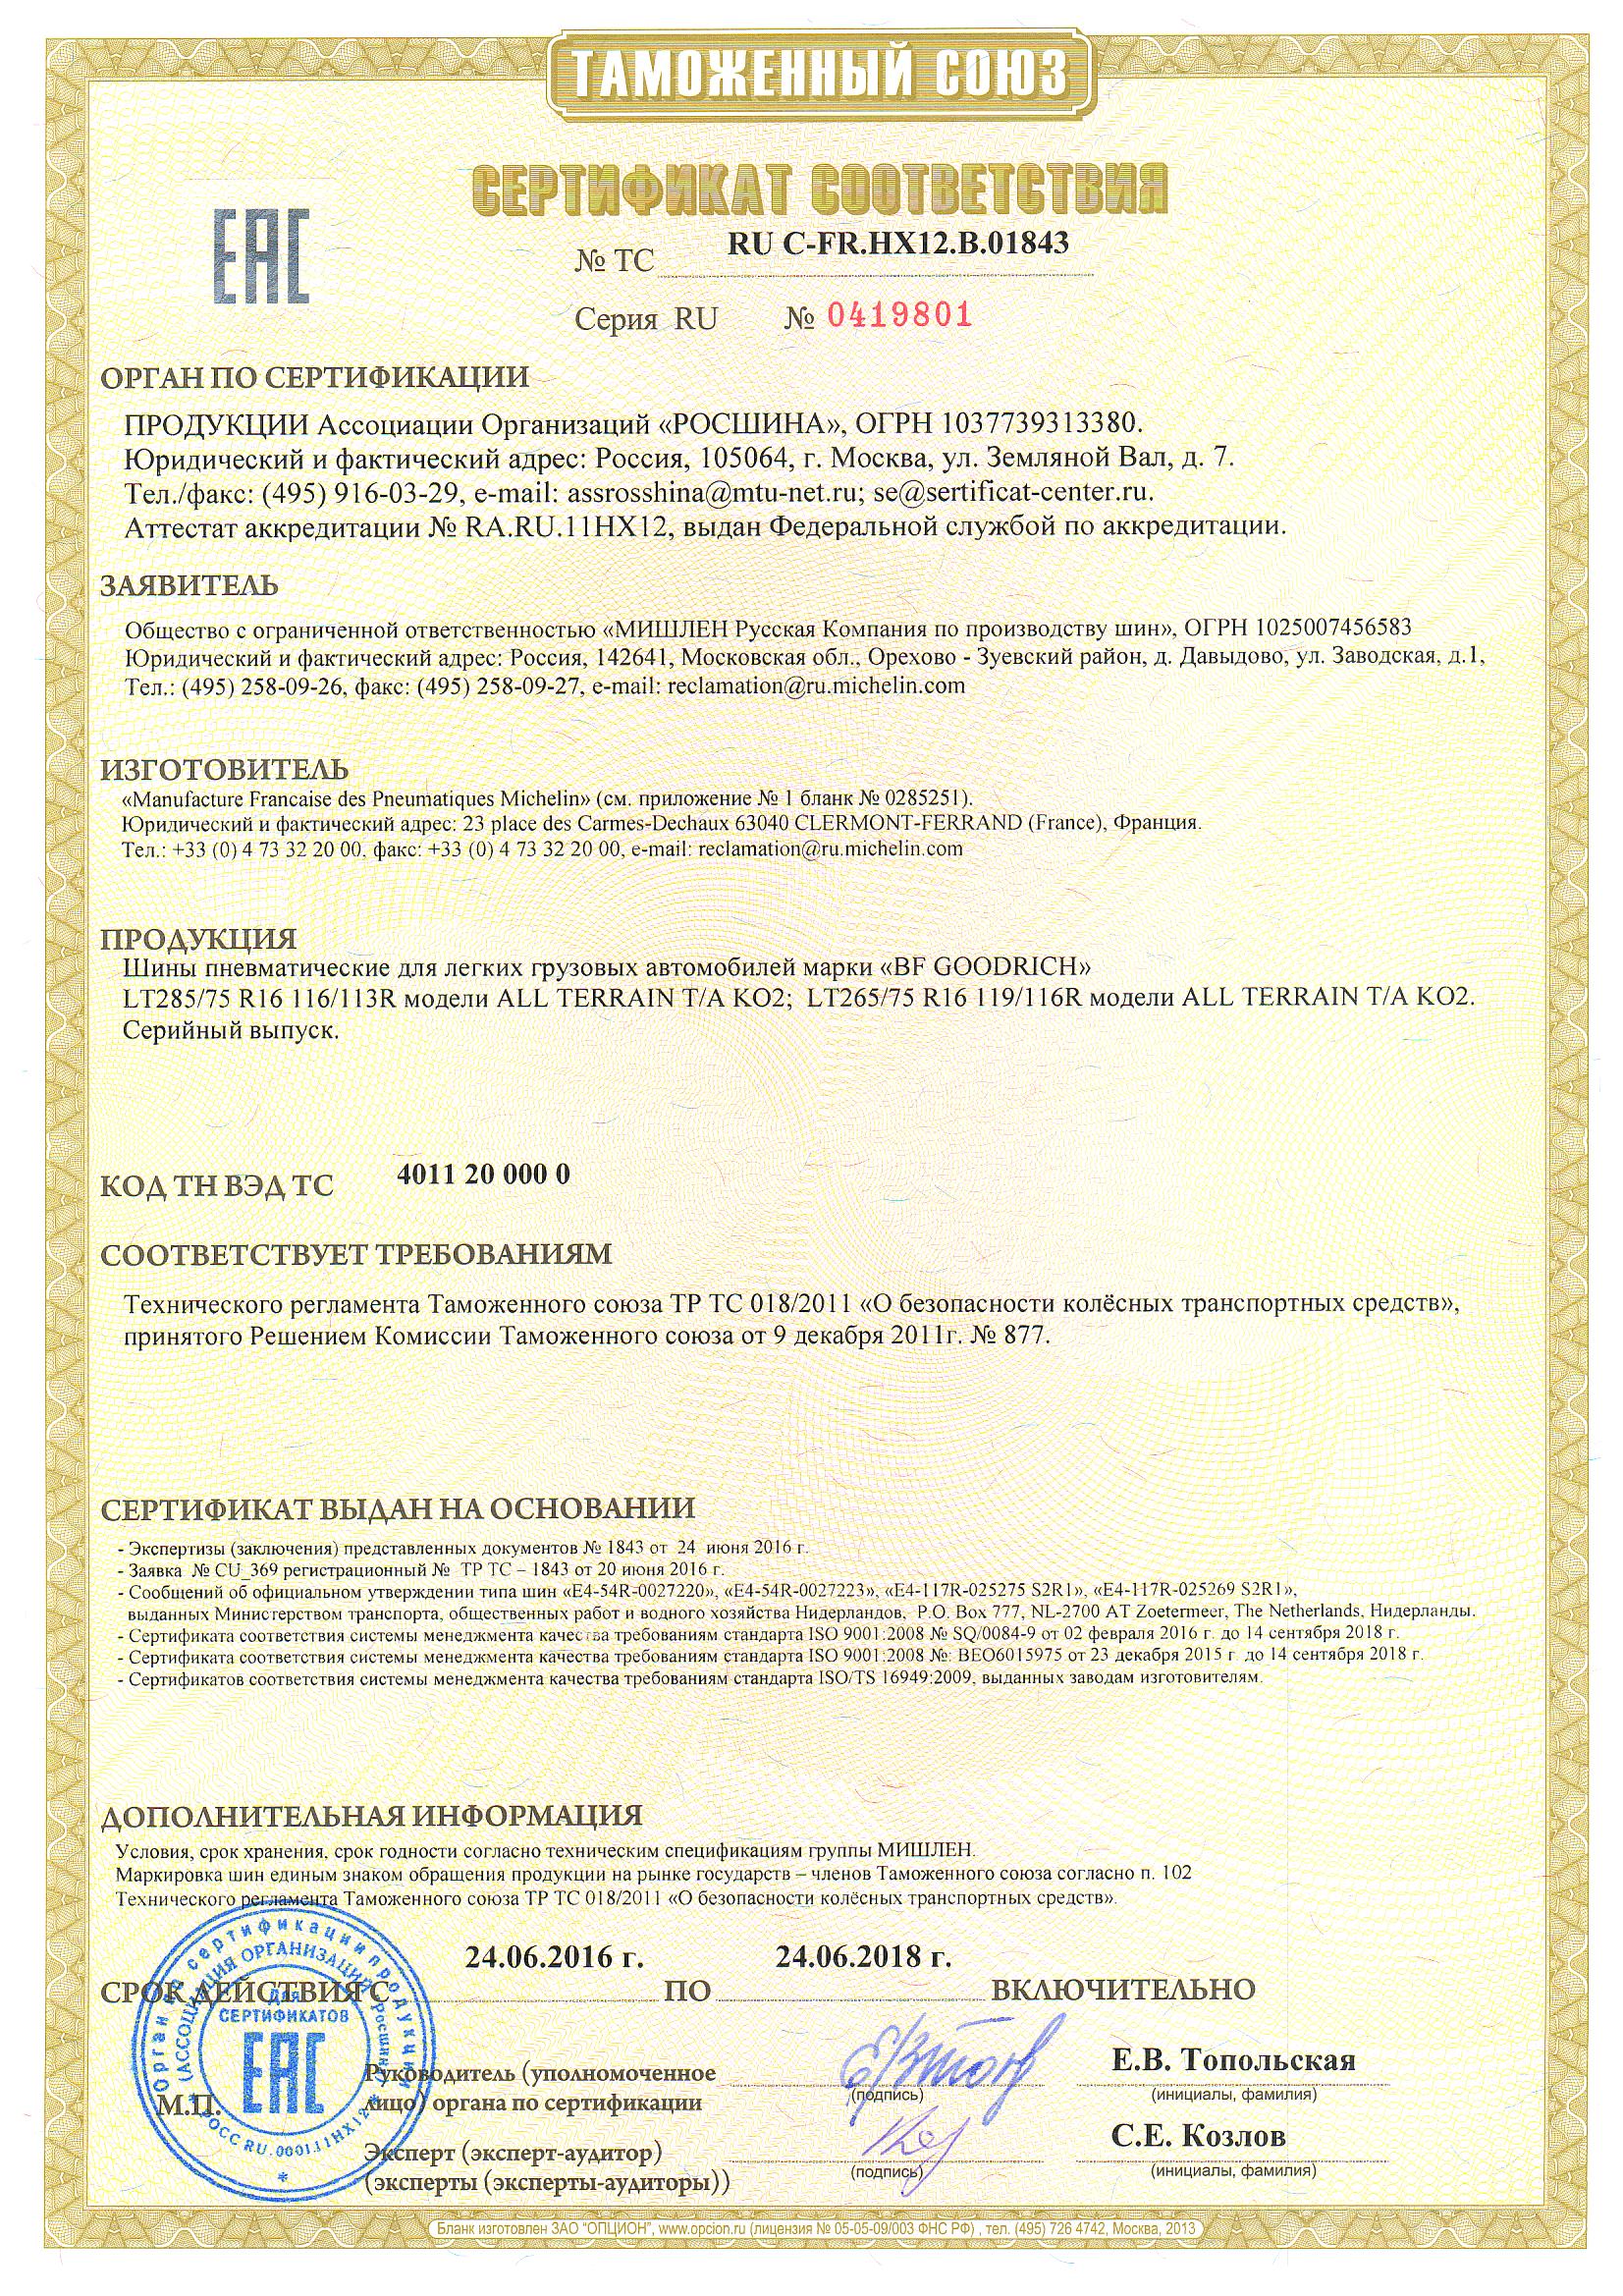 Сертификат на шины BF Goodrich № 1, 2, 3, 4, 5, 6, 7, 8, 9, 10, 11, 12